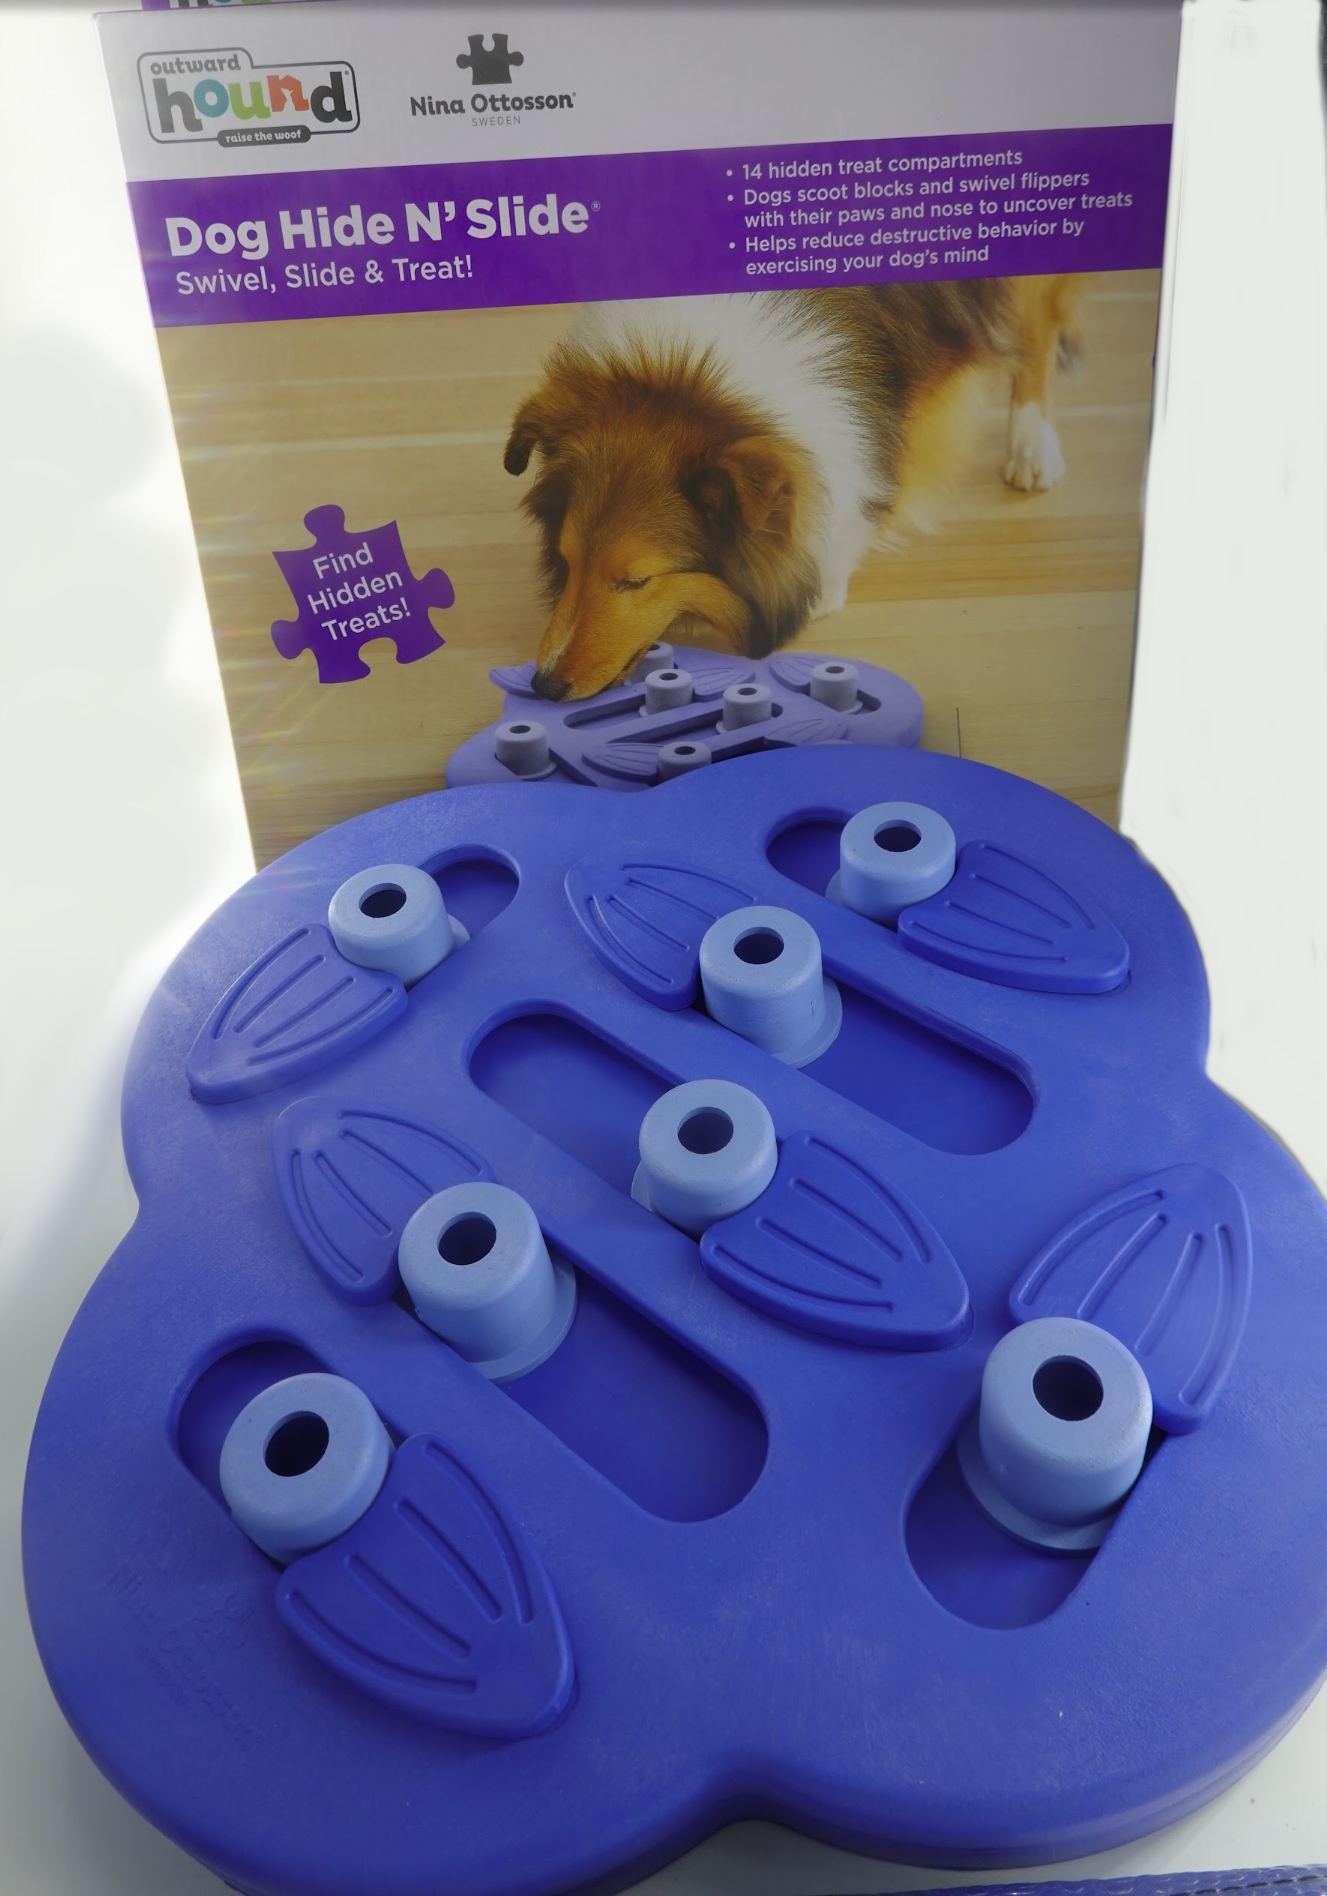 40oz Tumbler + Tumbler Strap + Interactive Dog Feeder Puzzle -Neptune's Hunt Dog Gift Set (Limited Edition)